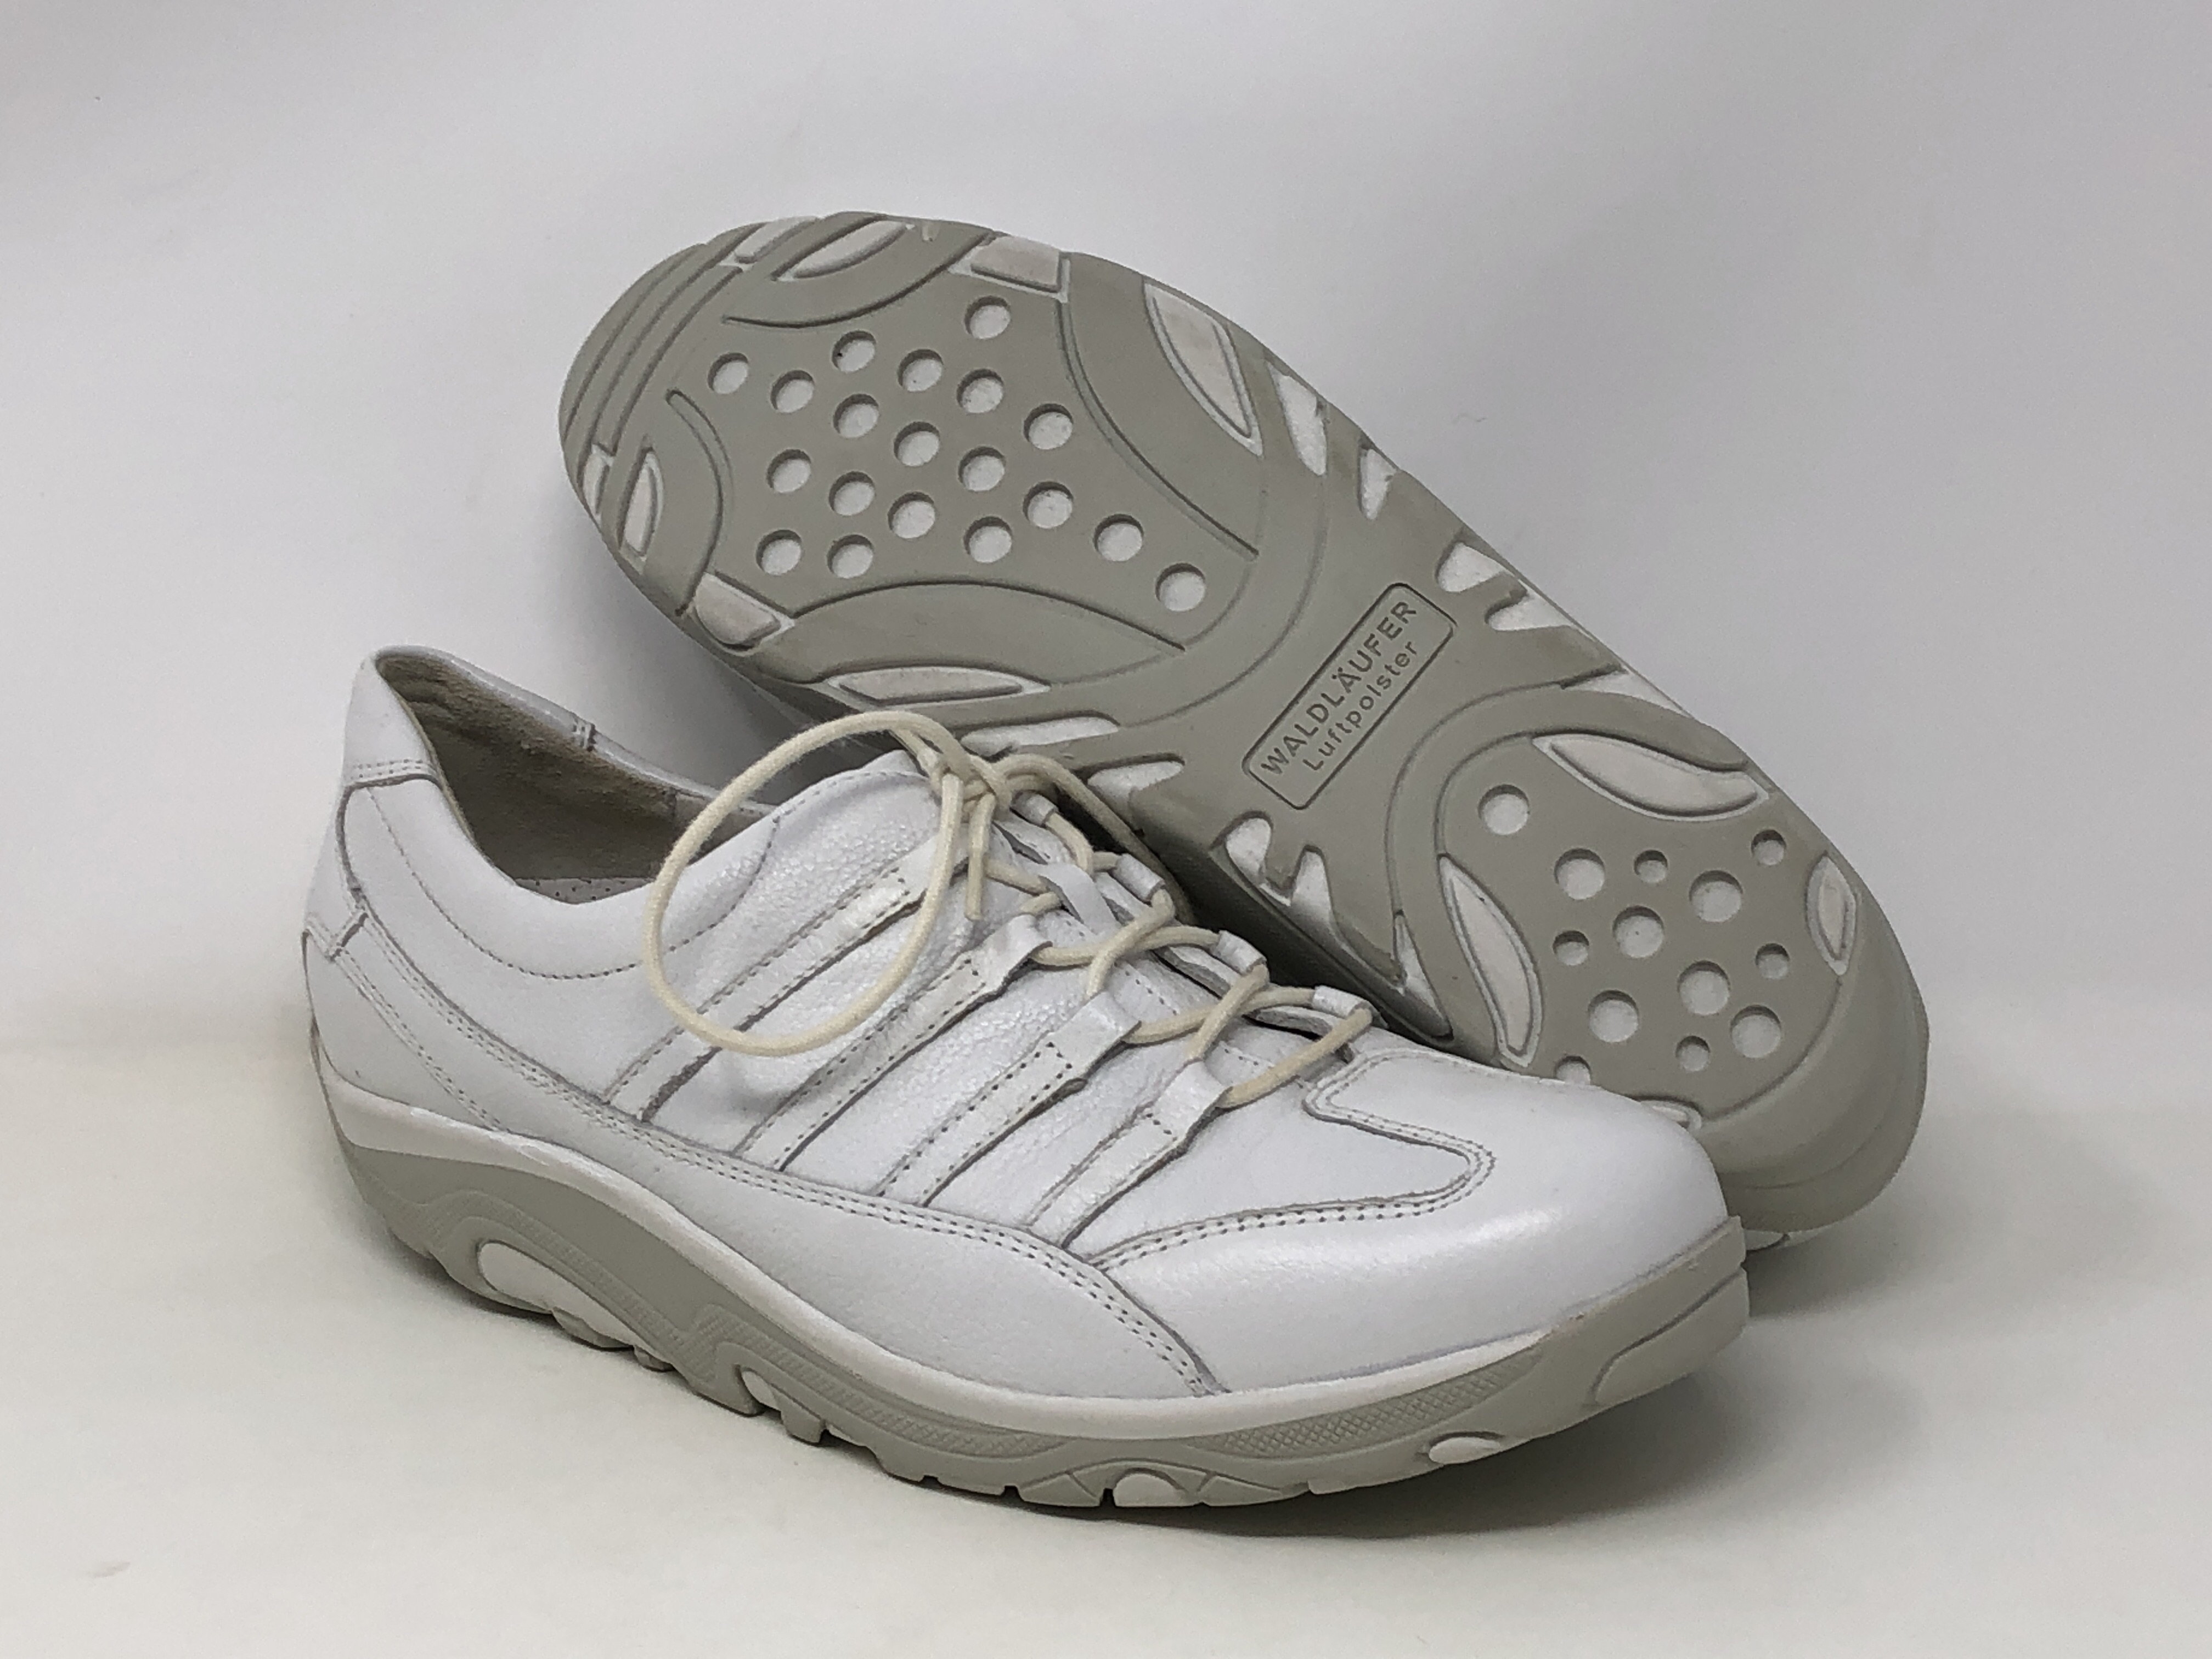 Waldlaufer Women's Hanika Walking Shoe, White, 7.5 B US | eBay